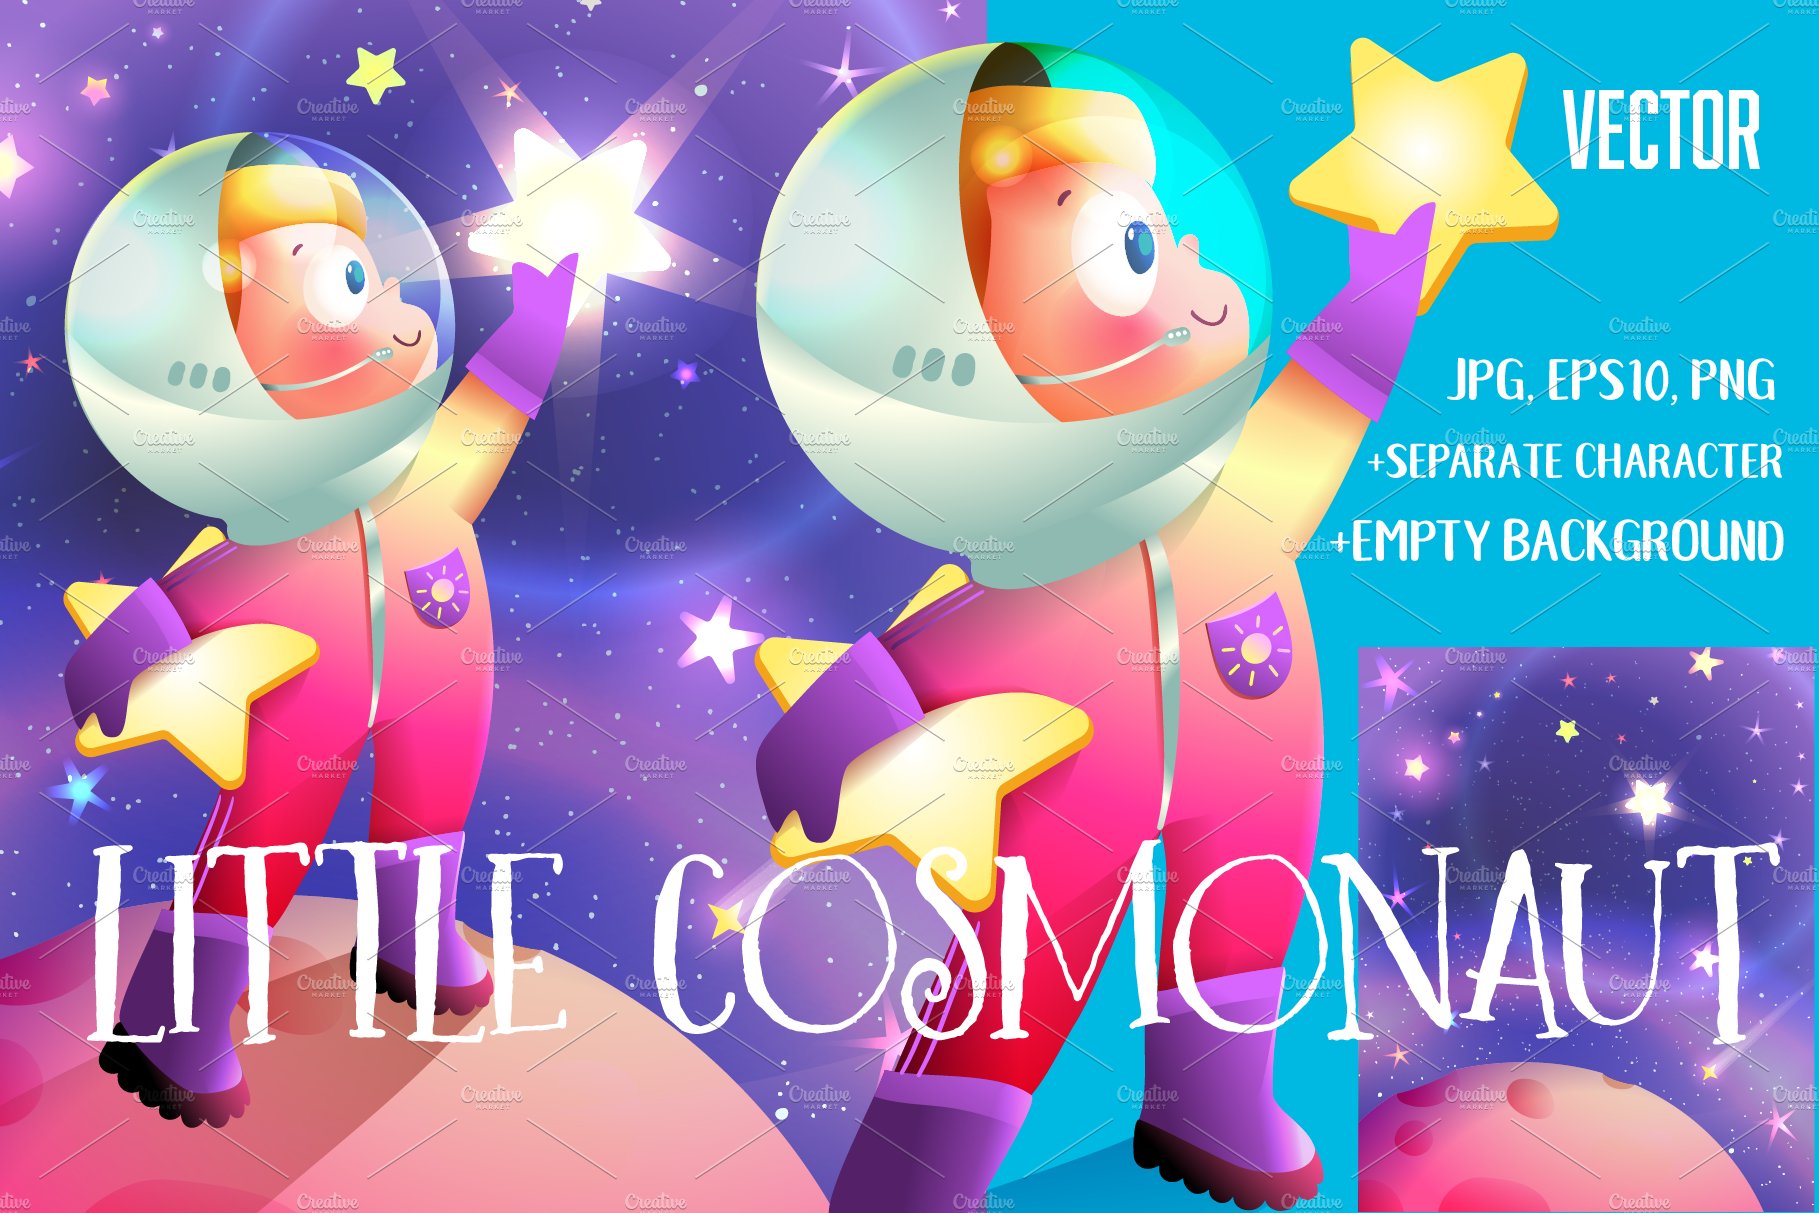 Little Cosmonaut Kids Illustration cover image.